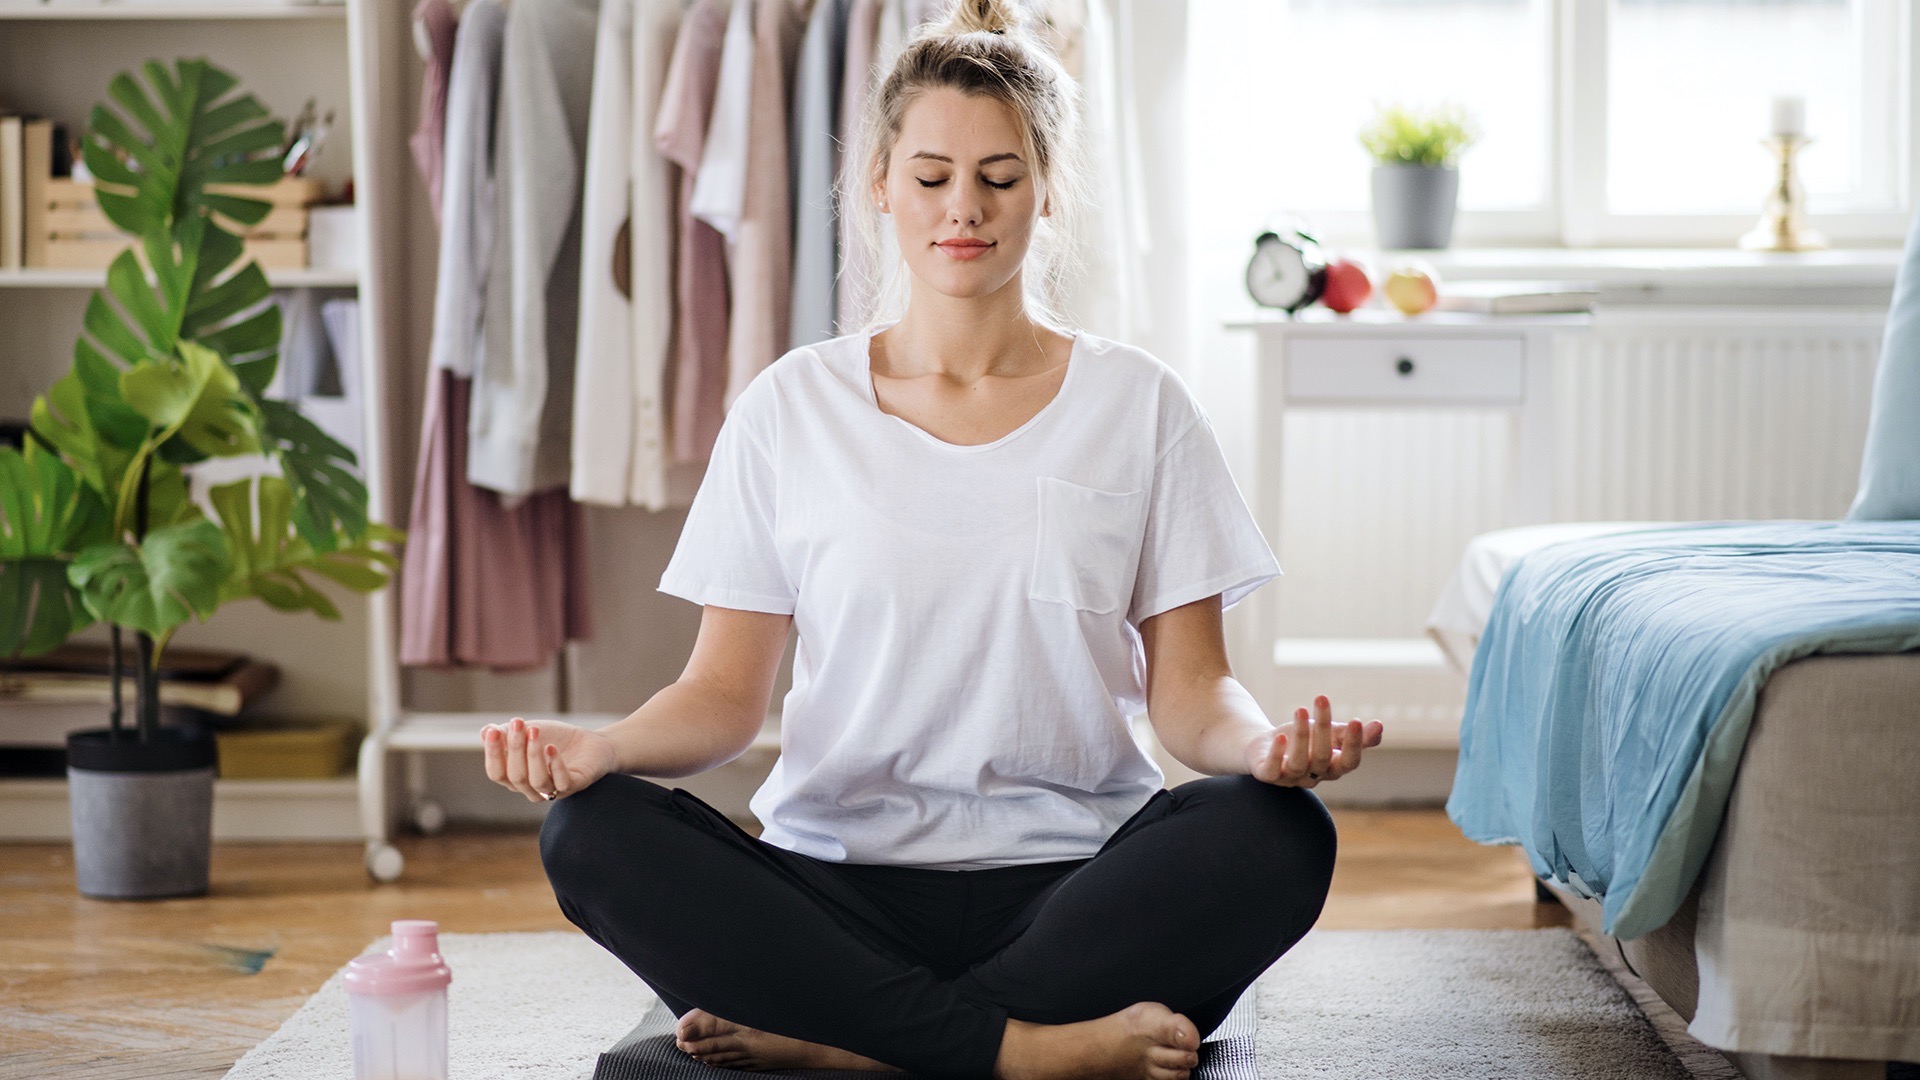  how capture wellness self-care mindfulness home 